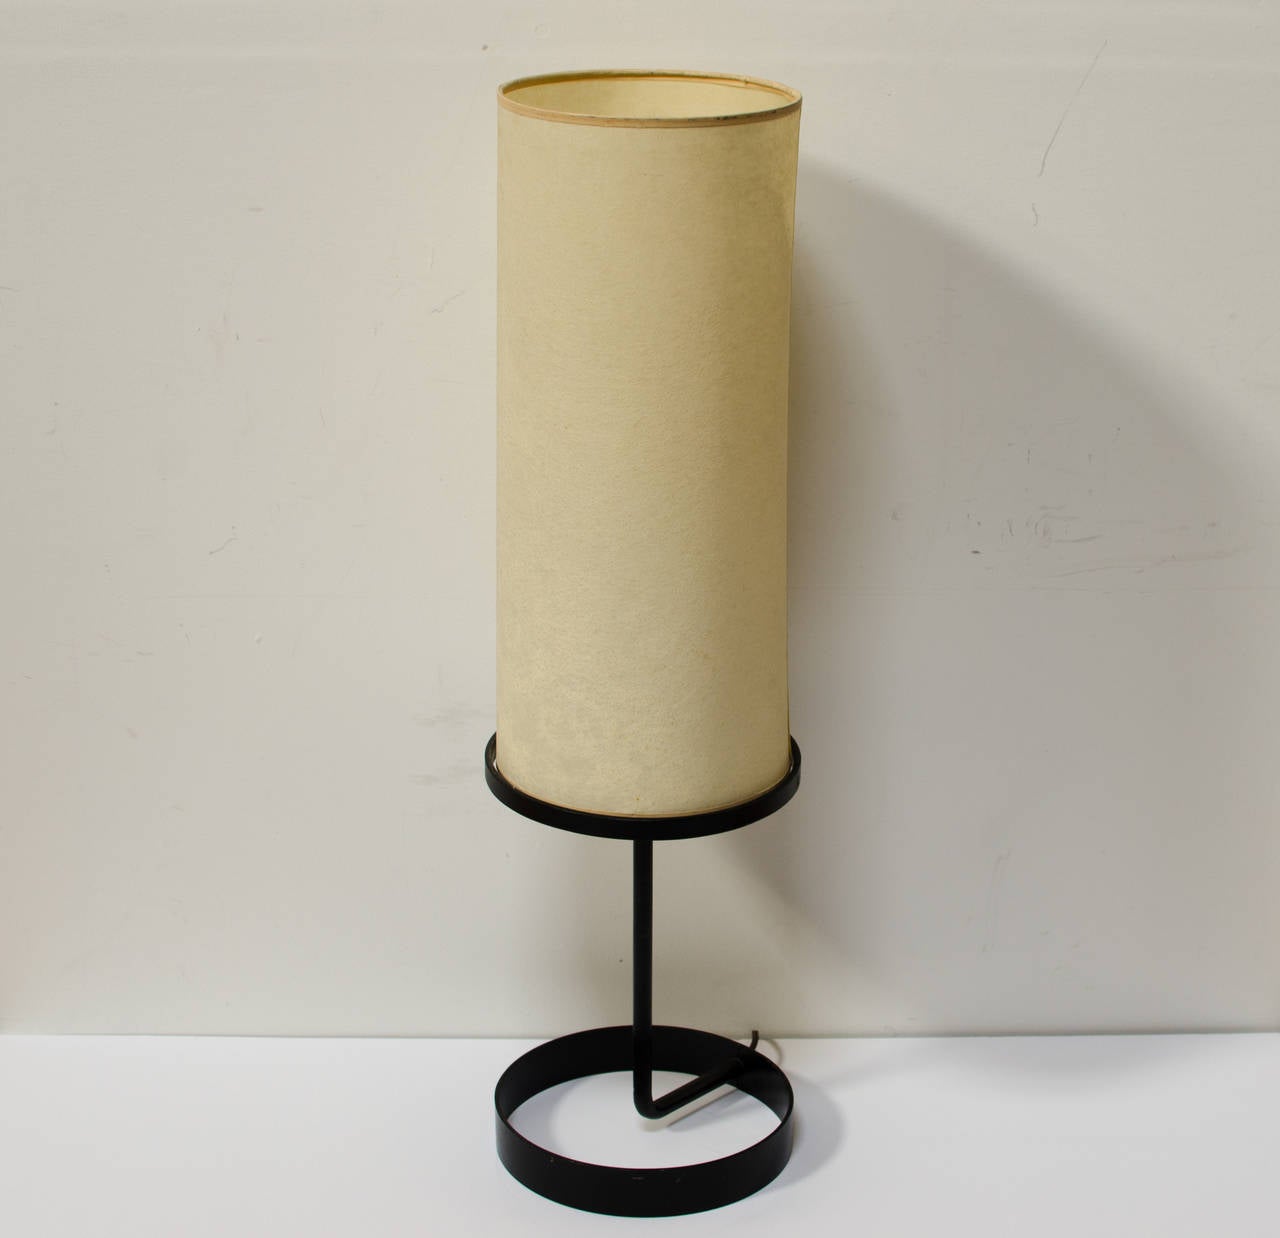 Rare iron table lamp designed by Ben Seibel. Stunning minimalist design.